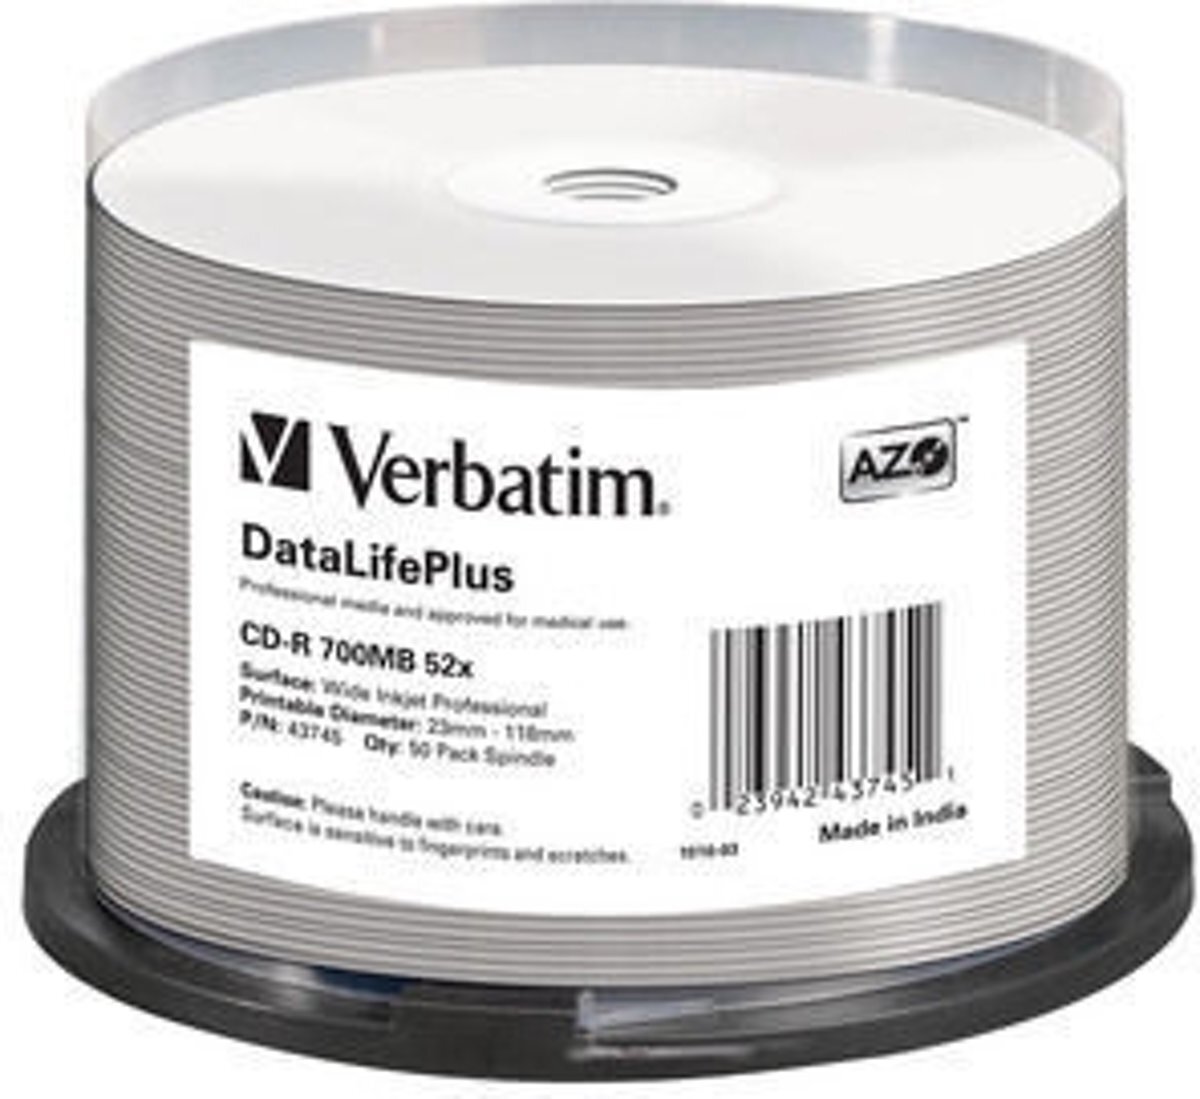 Verbatim CD-R/700MB 52x SupAZO 50pk w/PrintPRO